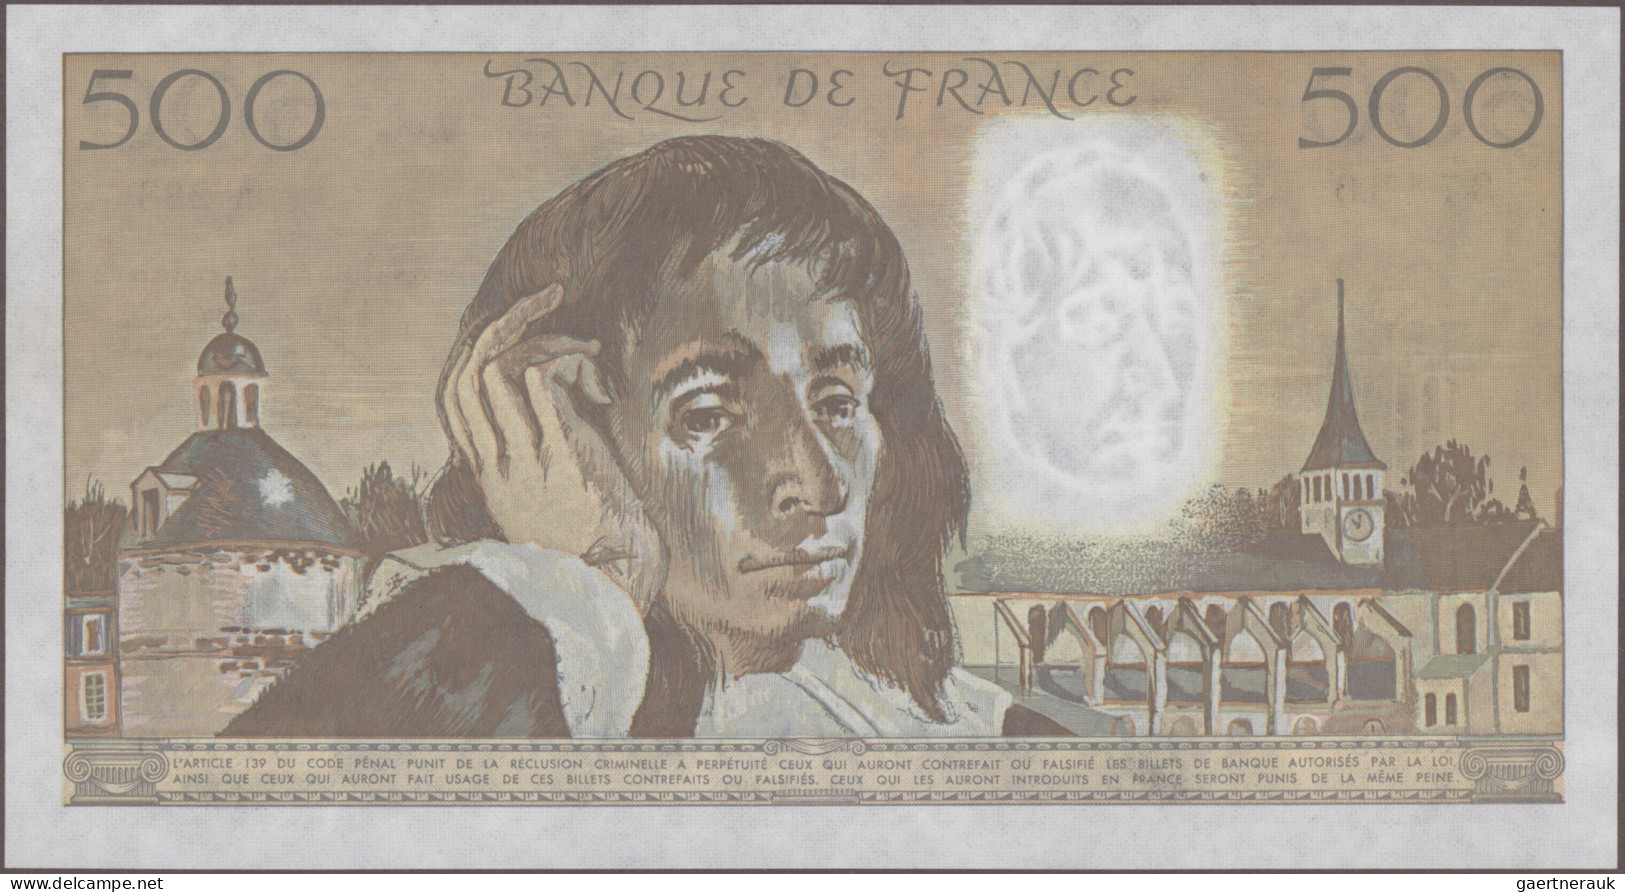 France: Banque de France, giant lot with 33 banknotes, series 1966-1997, compris